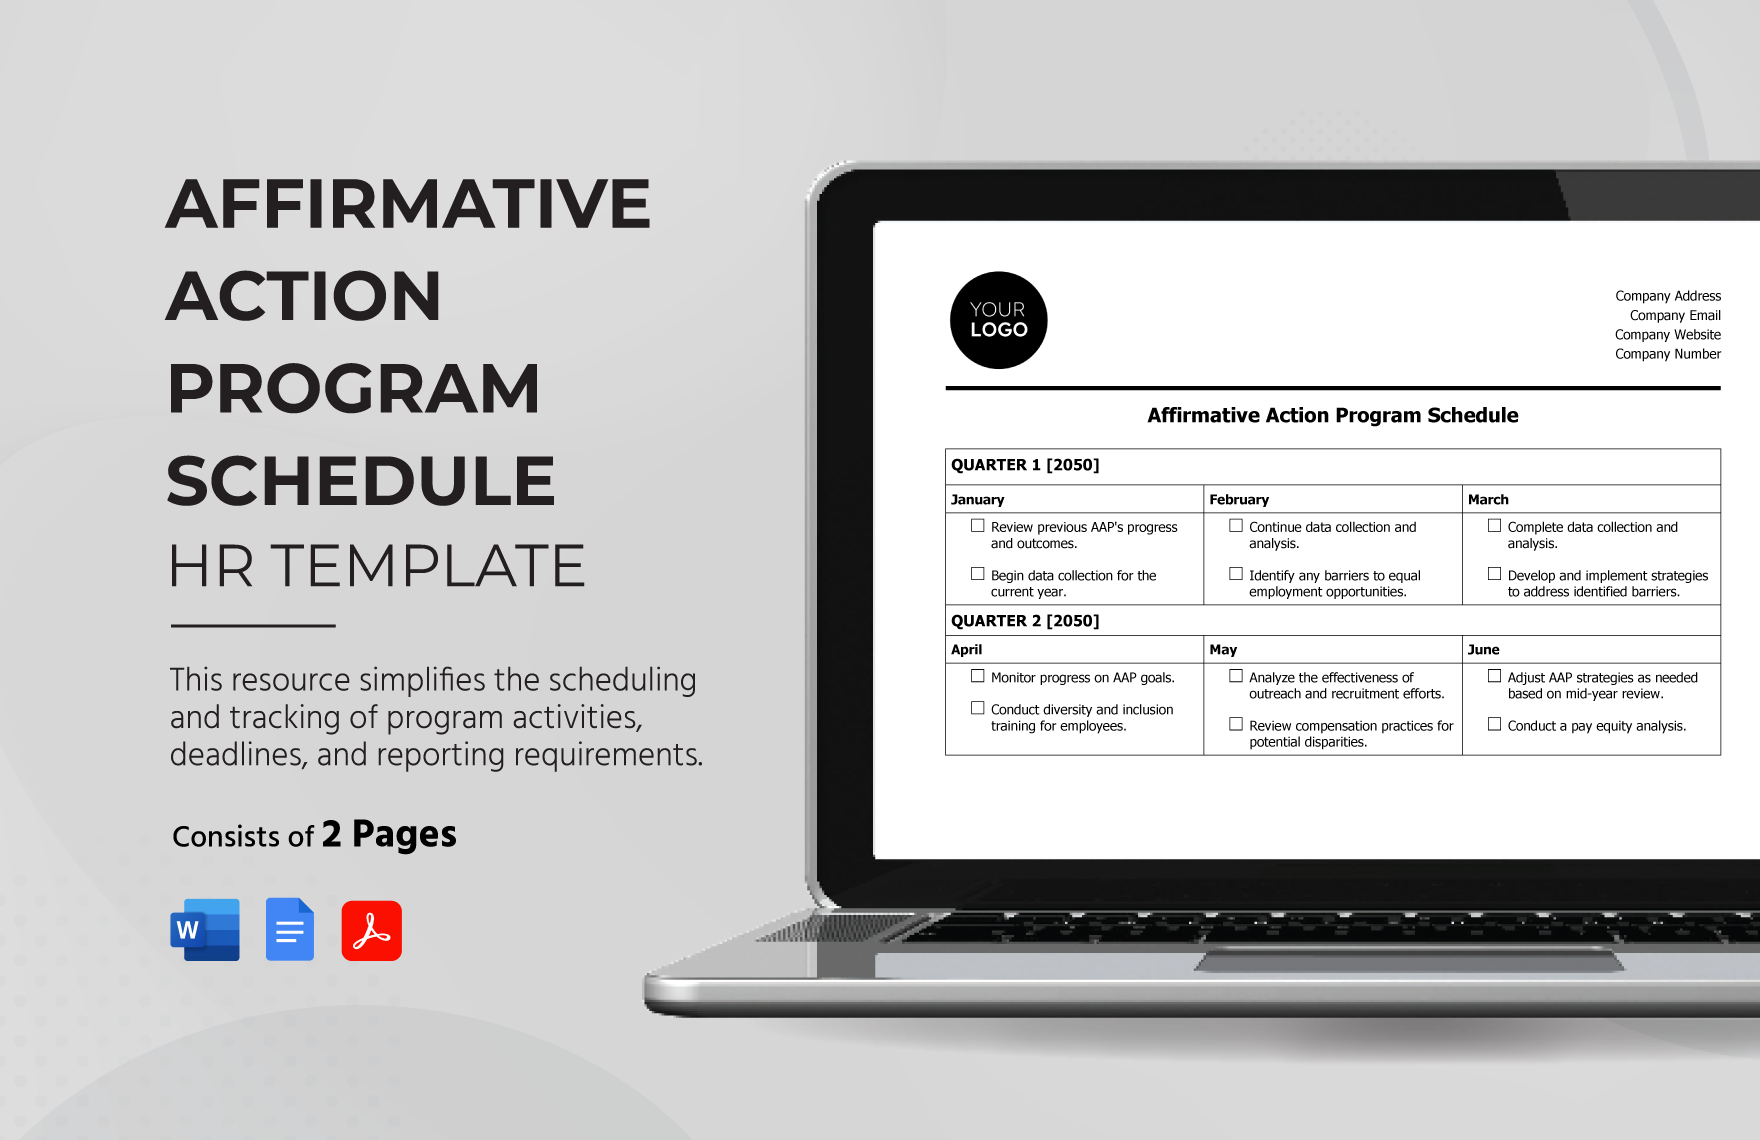 Affirmative Action Program Schedule HR Template